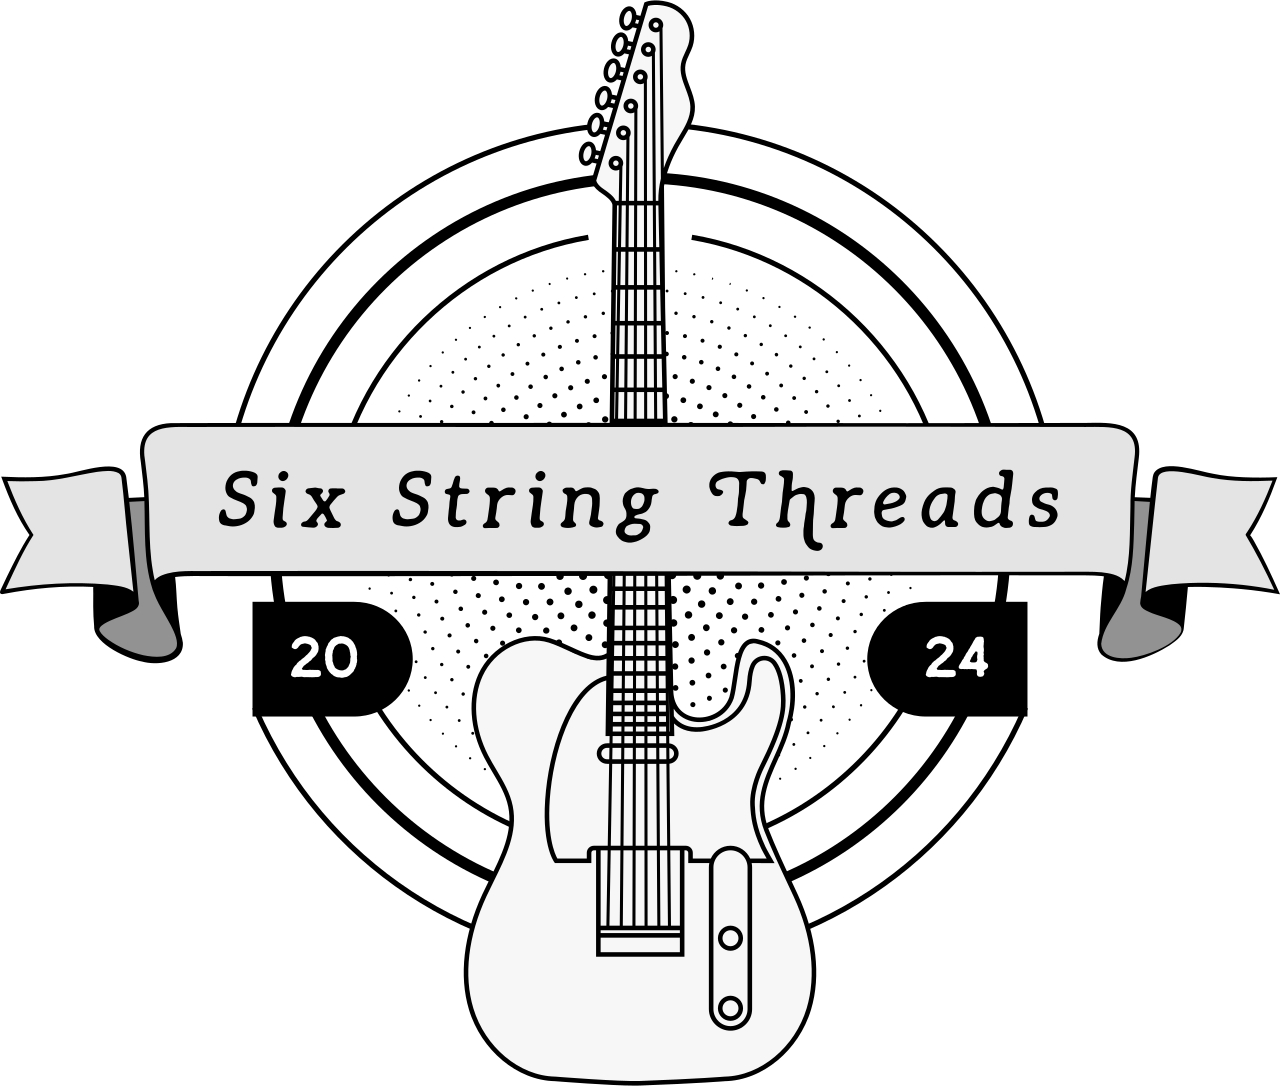 Six String Threads's logo